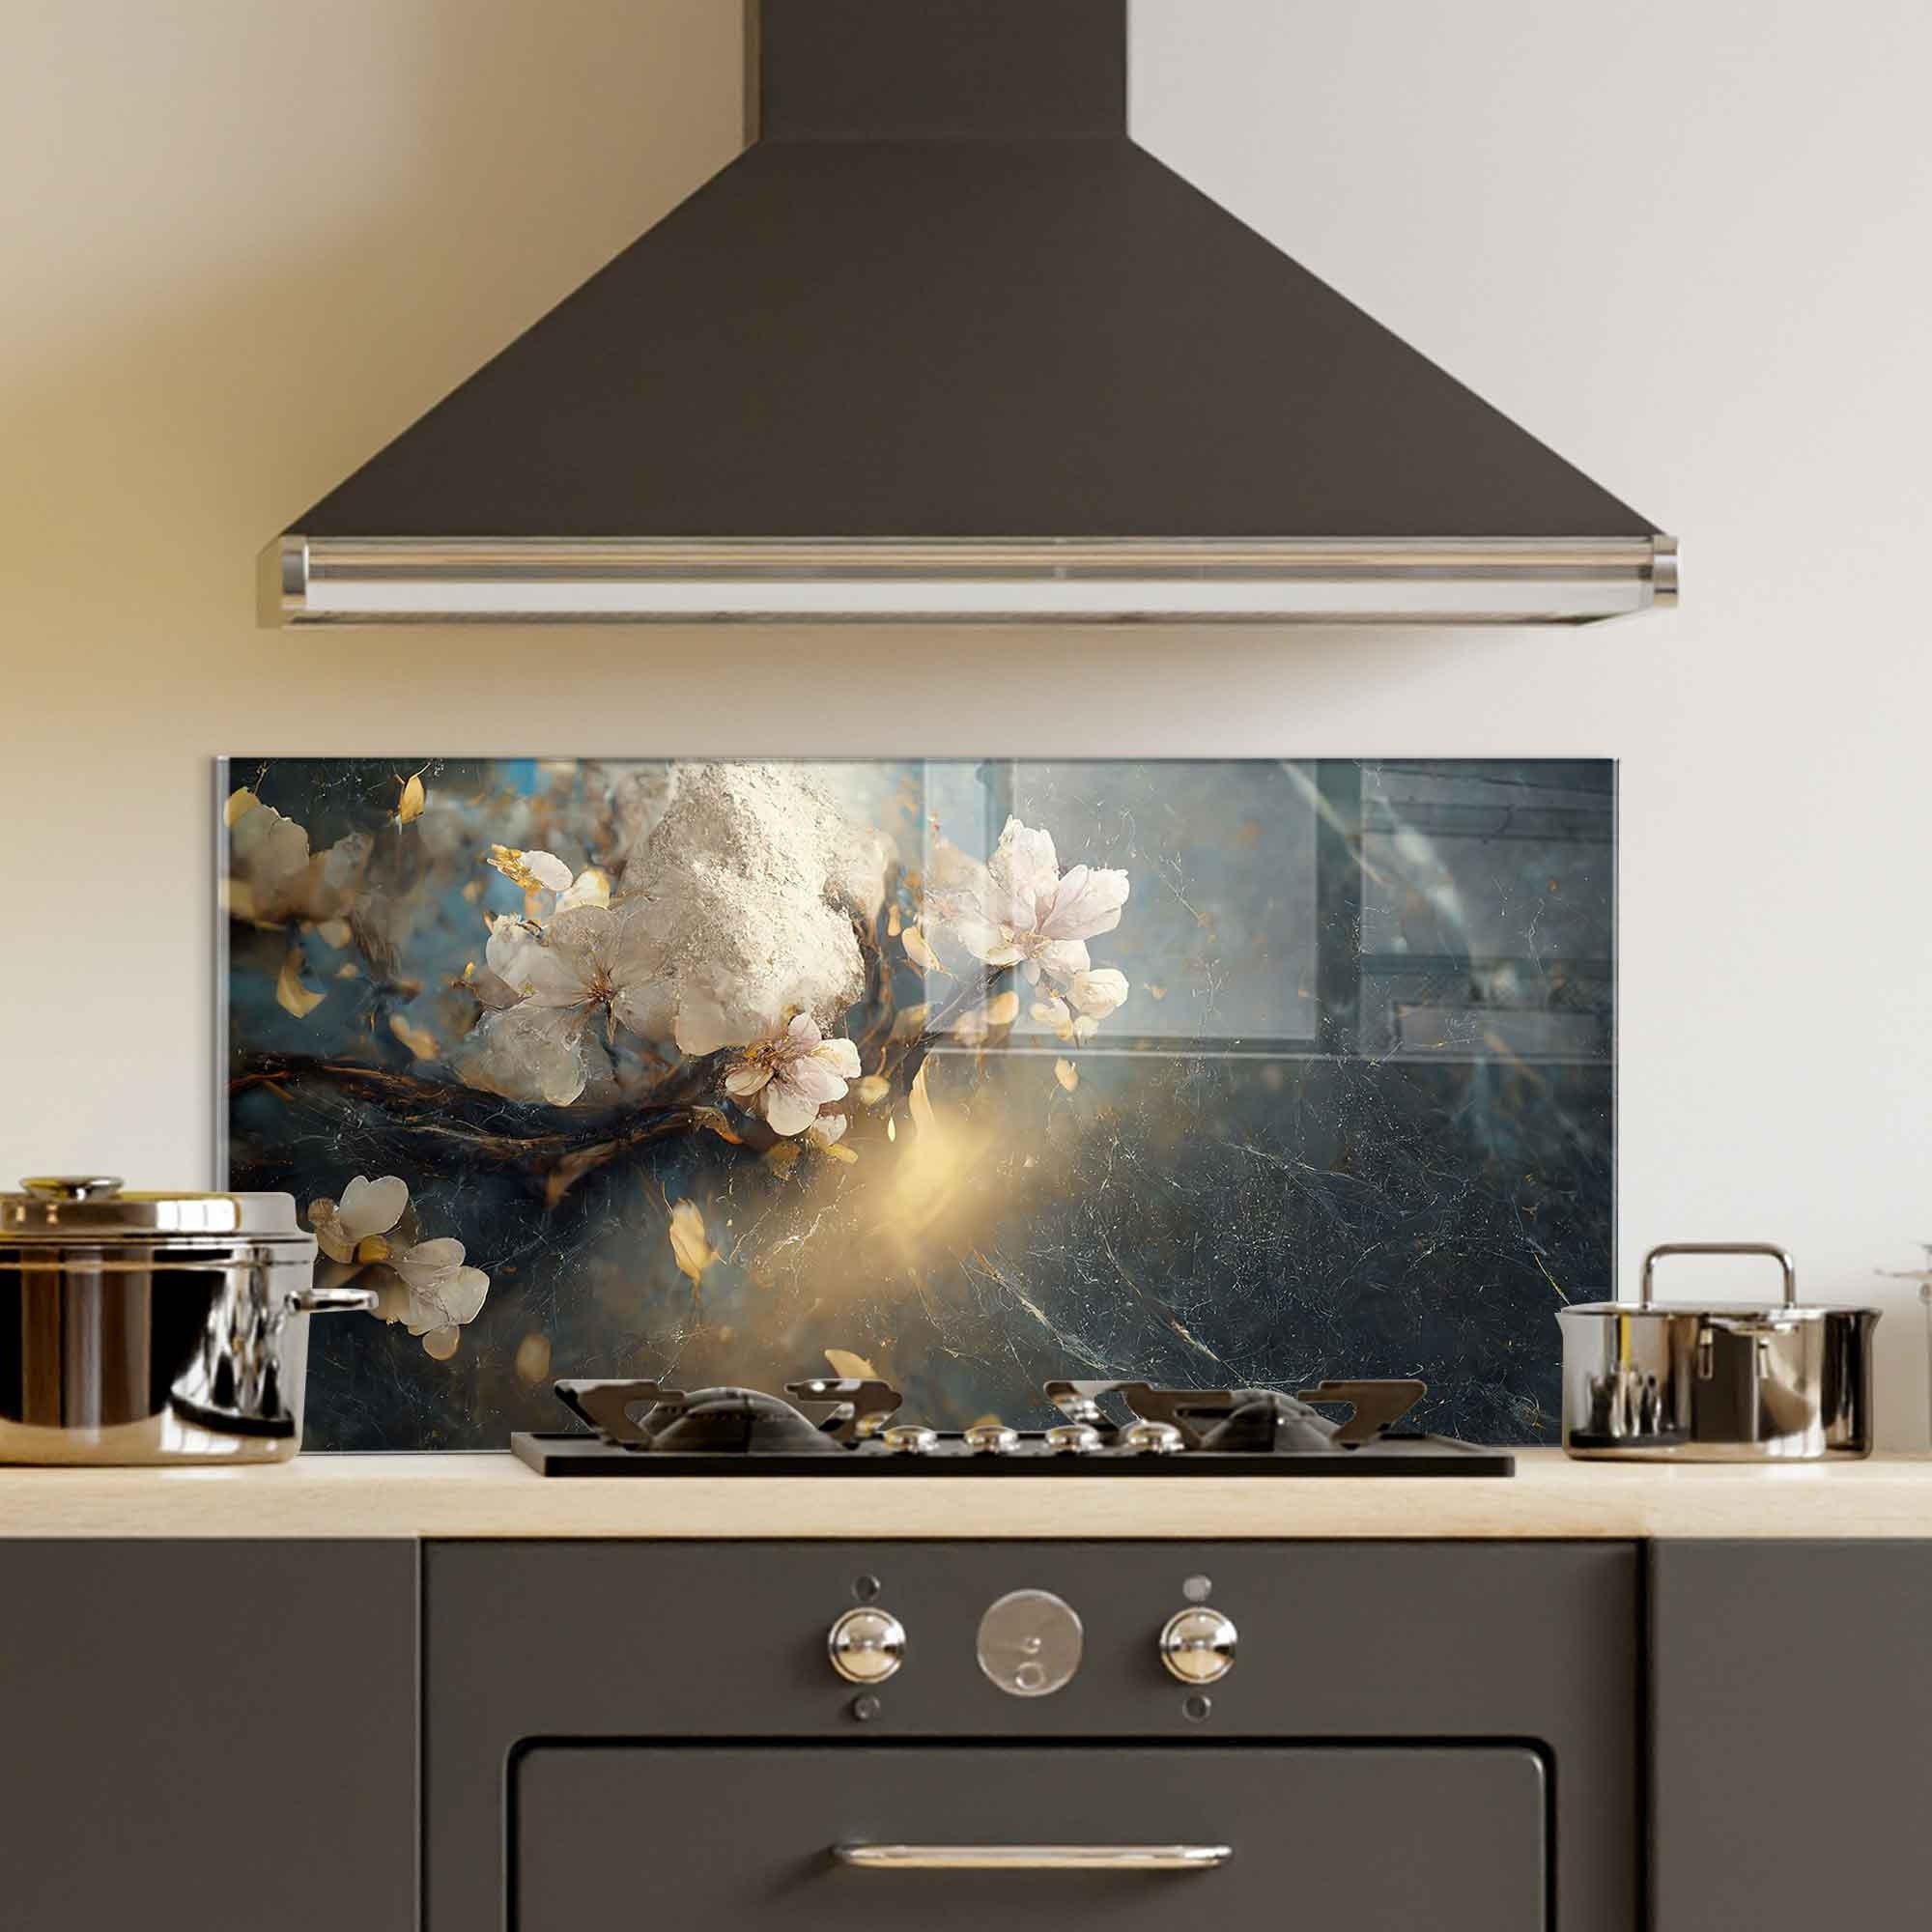 Tempered Glass Stove Backsplash Panel, Stove Back Cover, Kitchen Decor, Stove  Top Cover, Kitchen Backsplash Tile, Chopping and Noodle Board -  UK